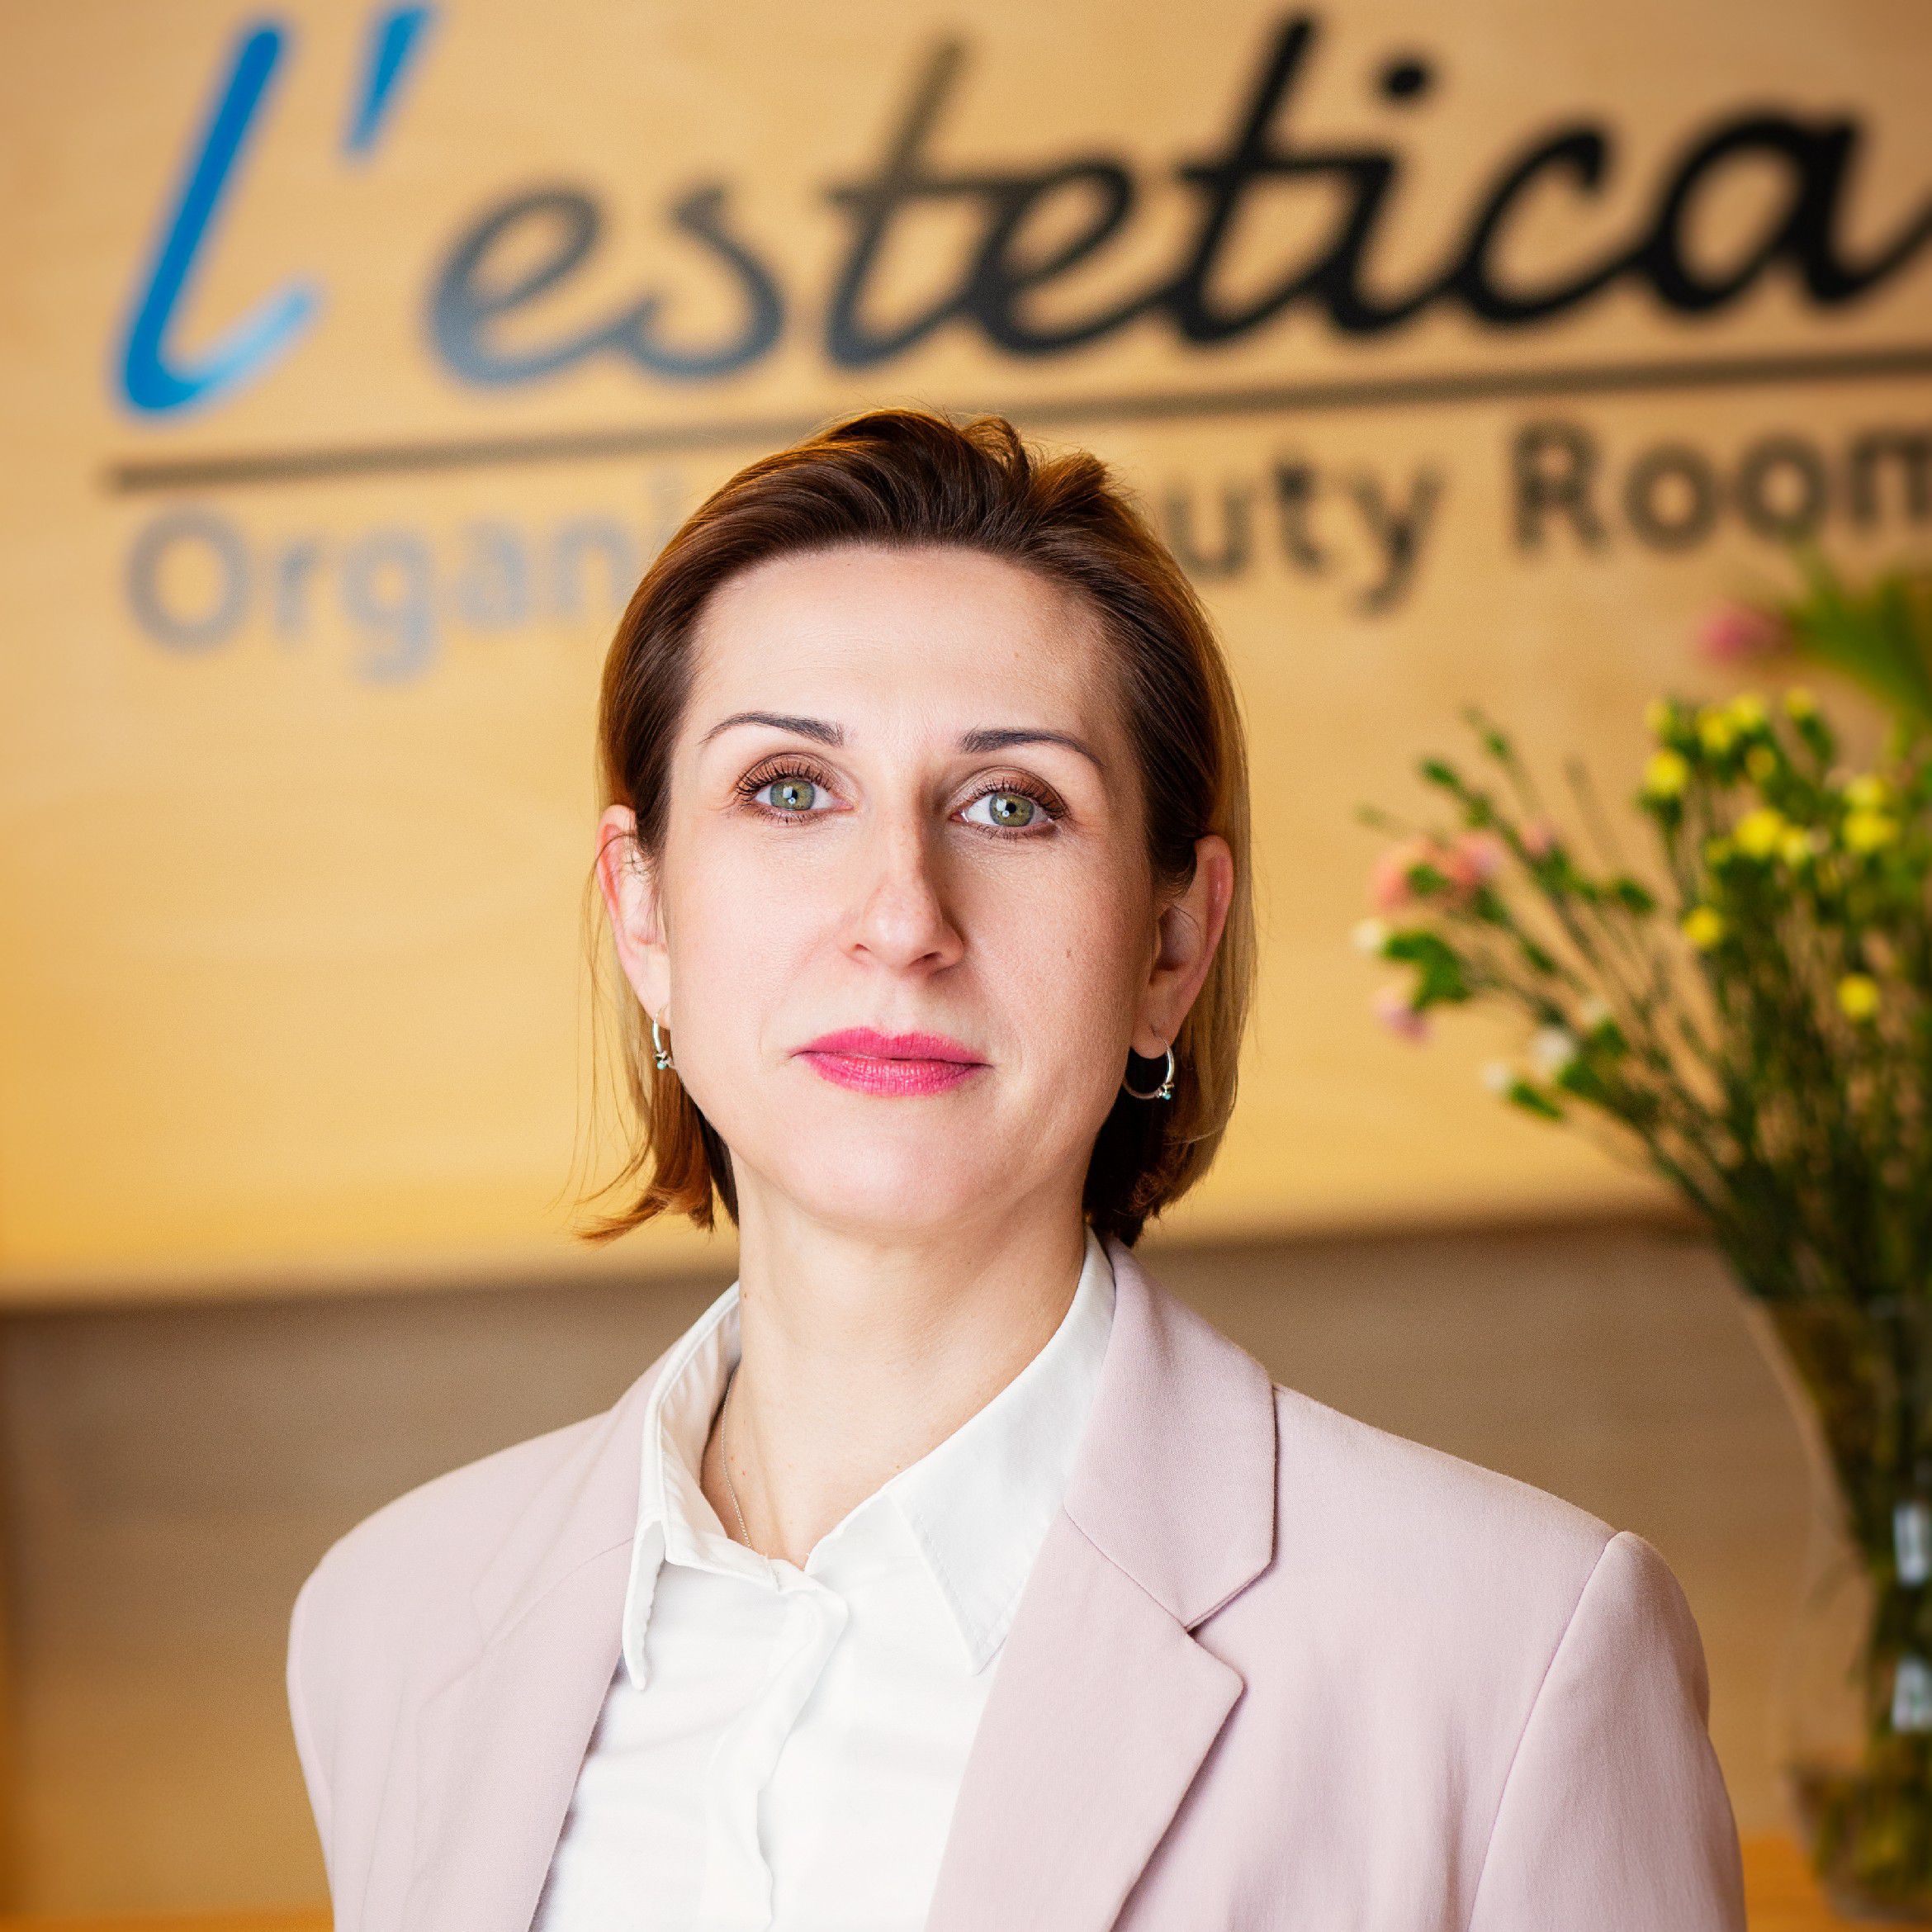 Katarzyna Suchocka - L'ESTETICA Organic Beauty Room